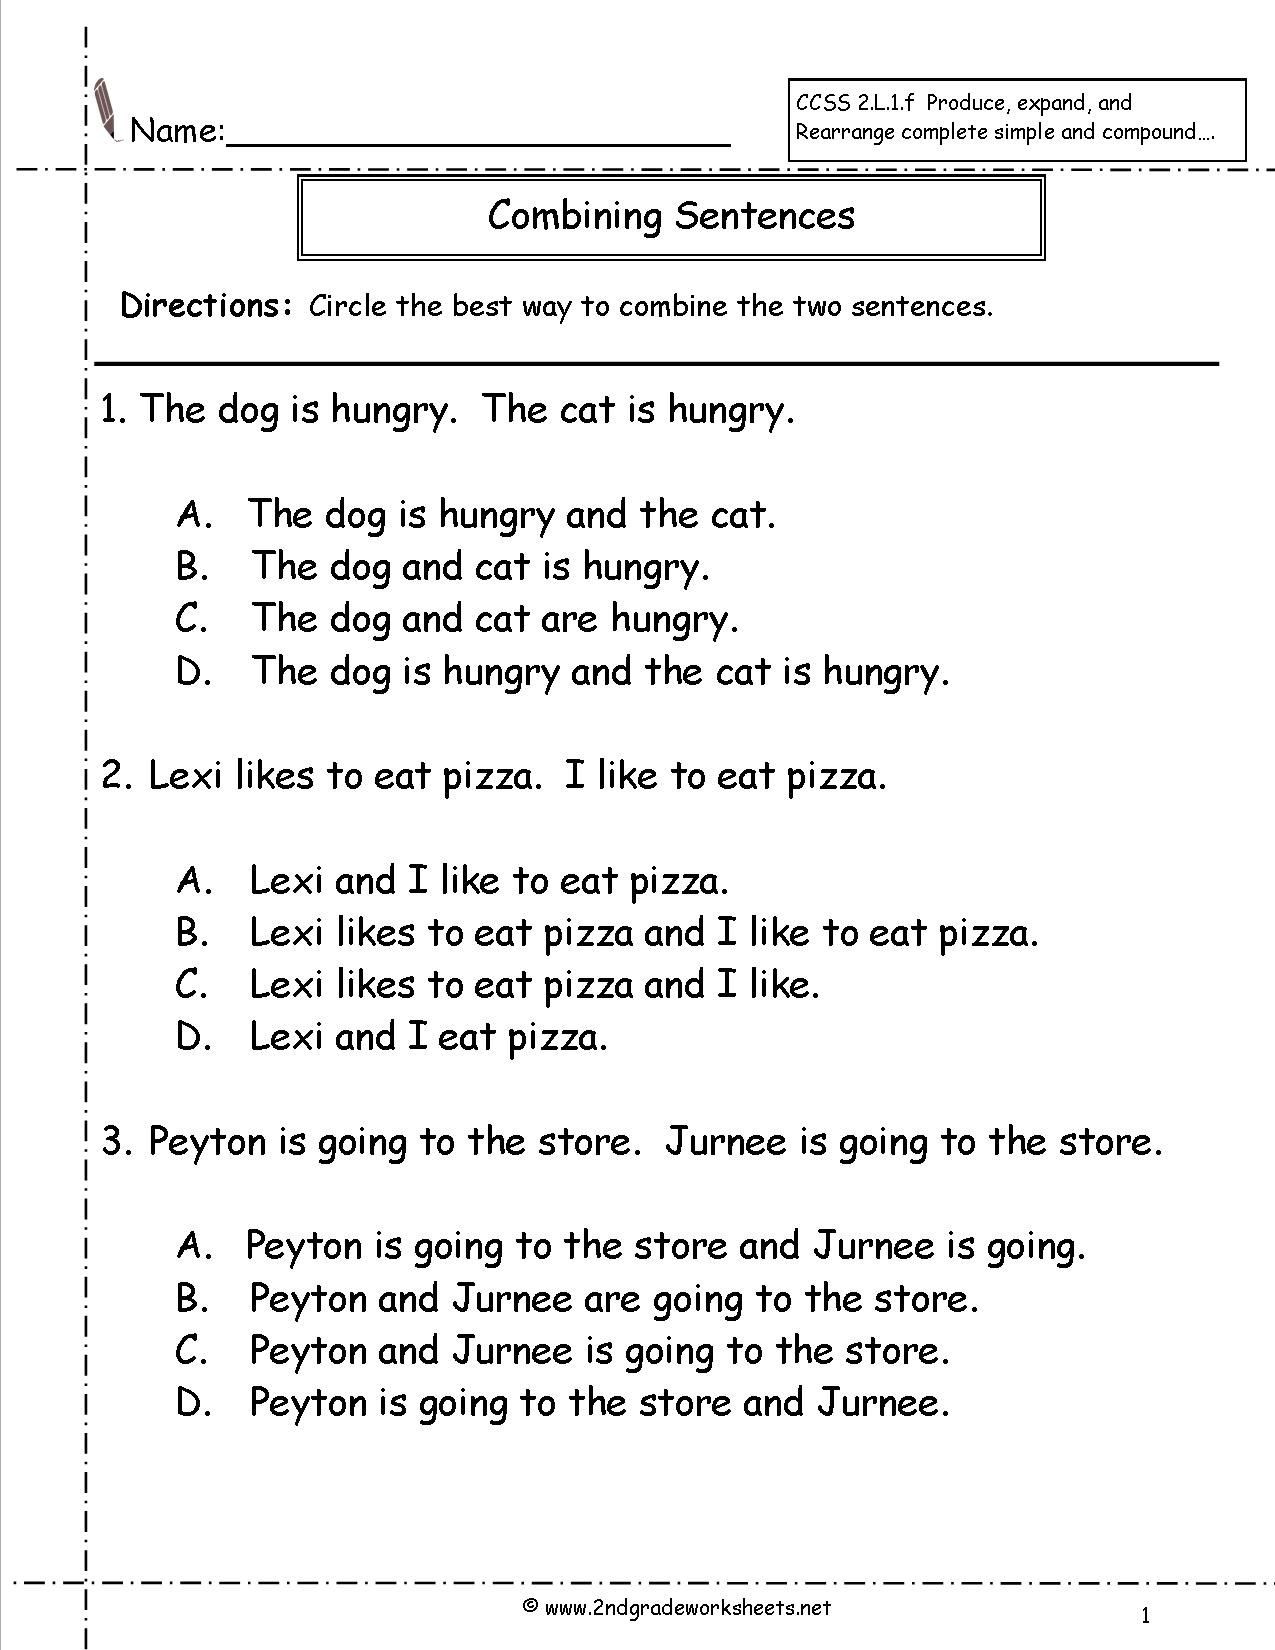 Topic Sentence Worksheets 5th Grade Bining Sentences Worksheet with Images